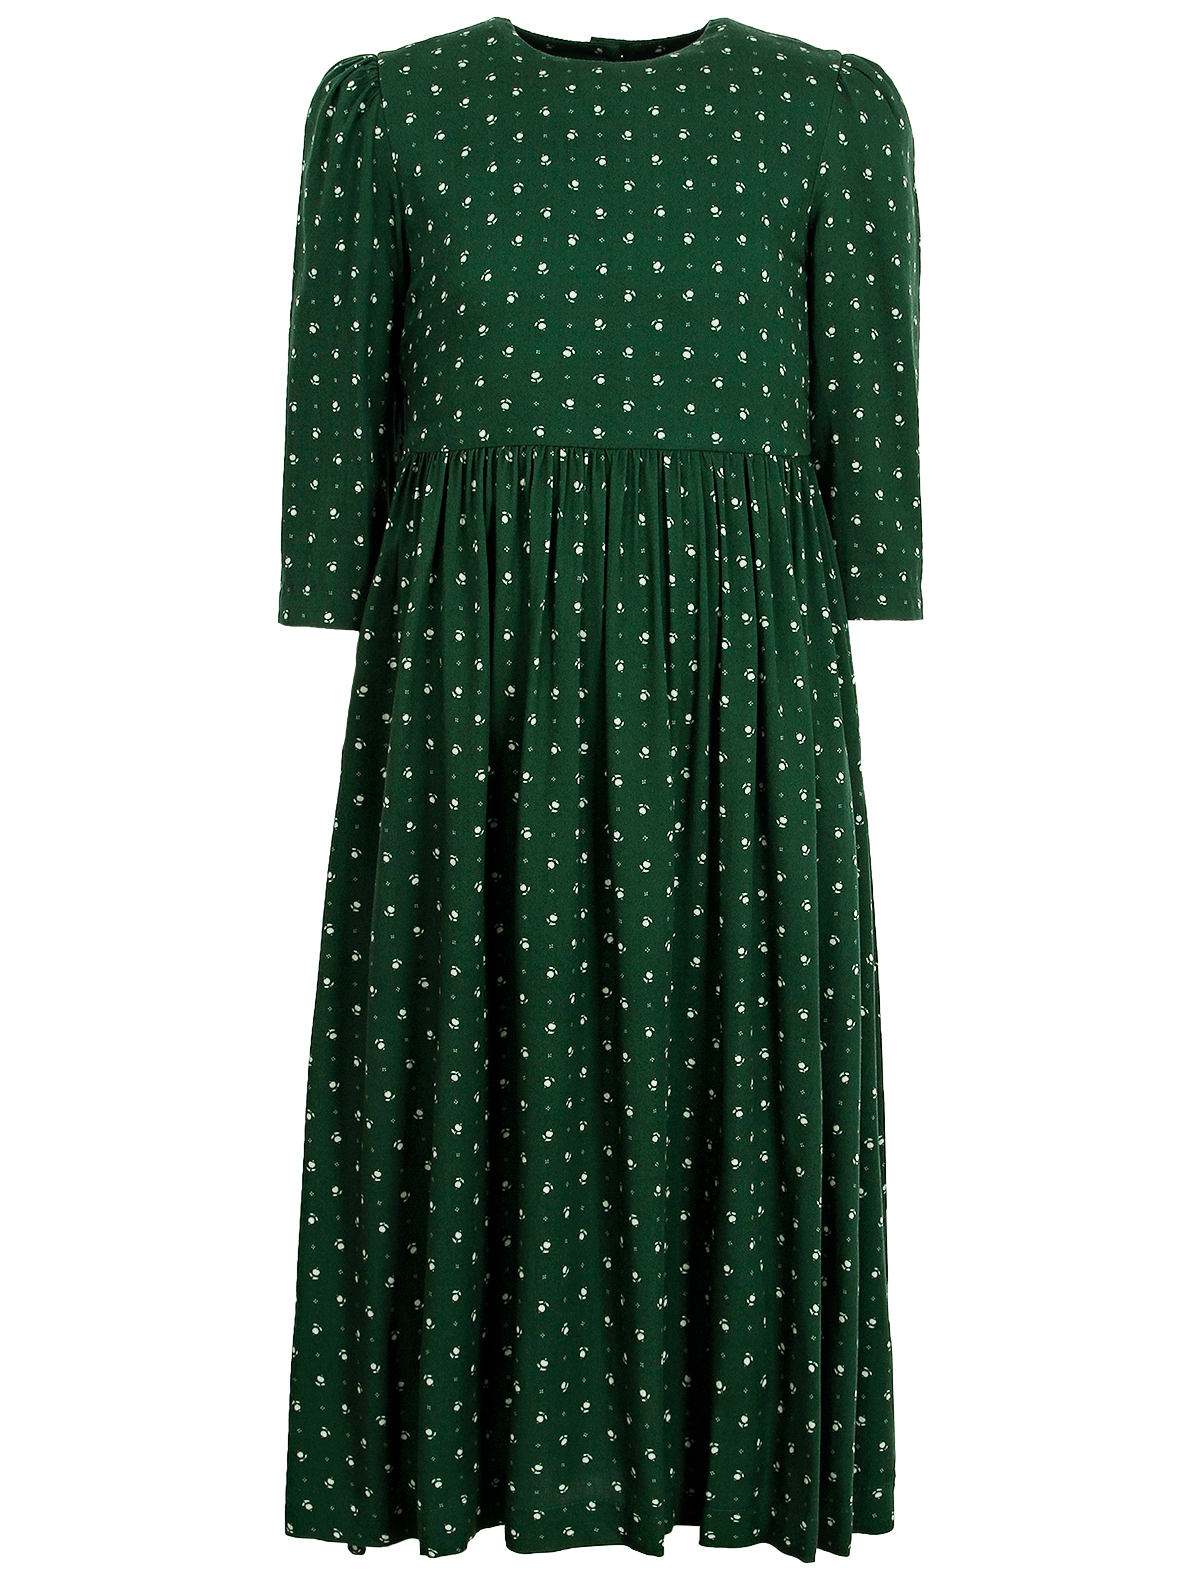 Платье Ulyana Sergeenko зеленого цвета